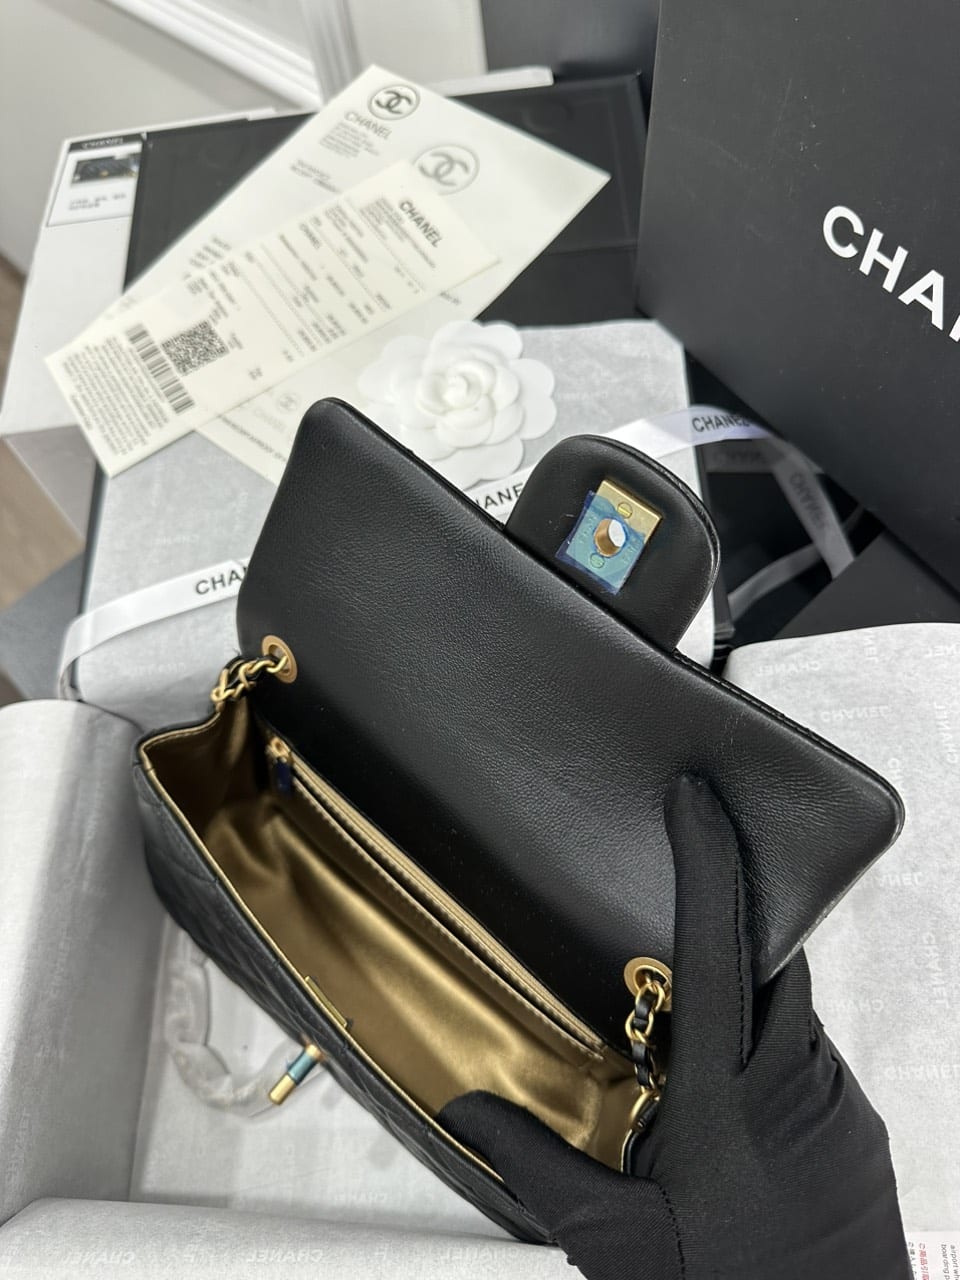 Chanel - Timeless Classic Flap Jumbo Shoulder bag - Catawiki